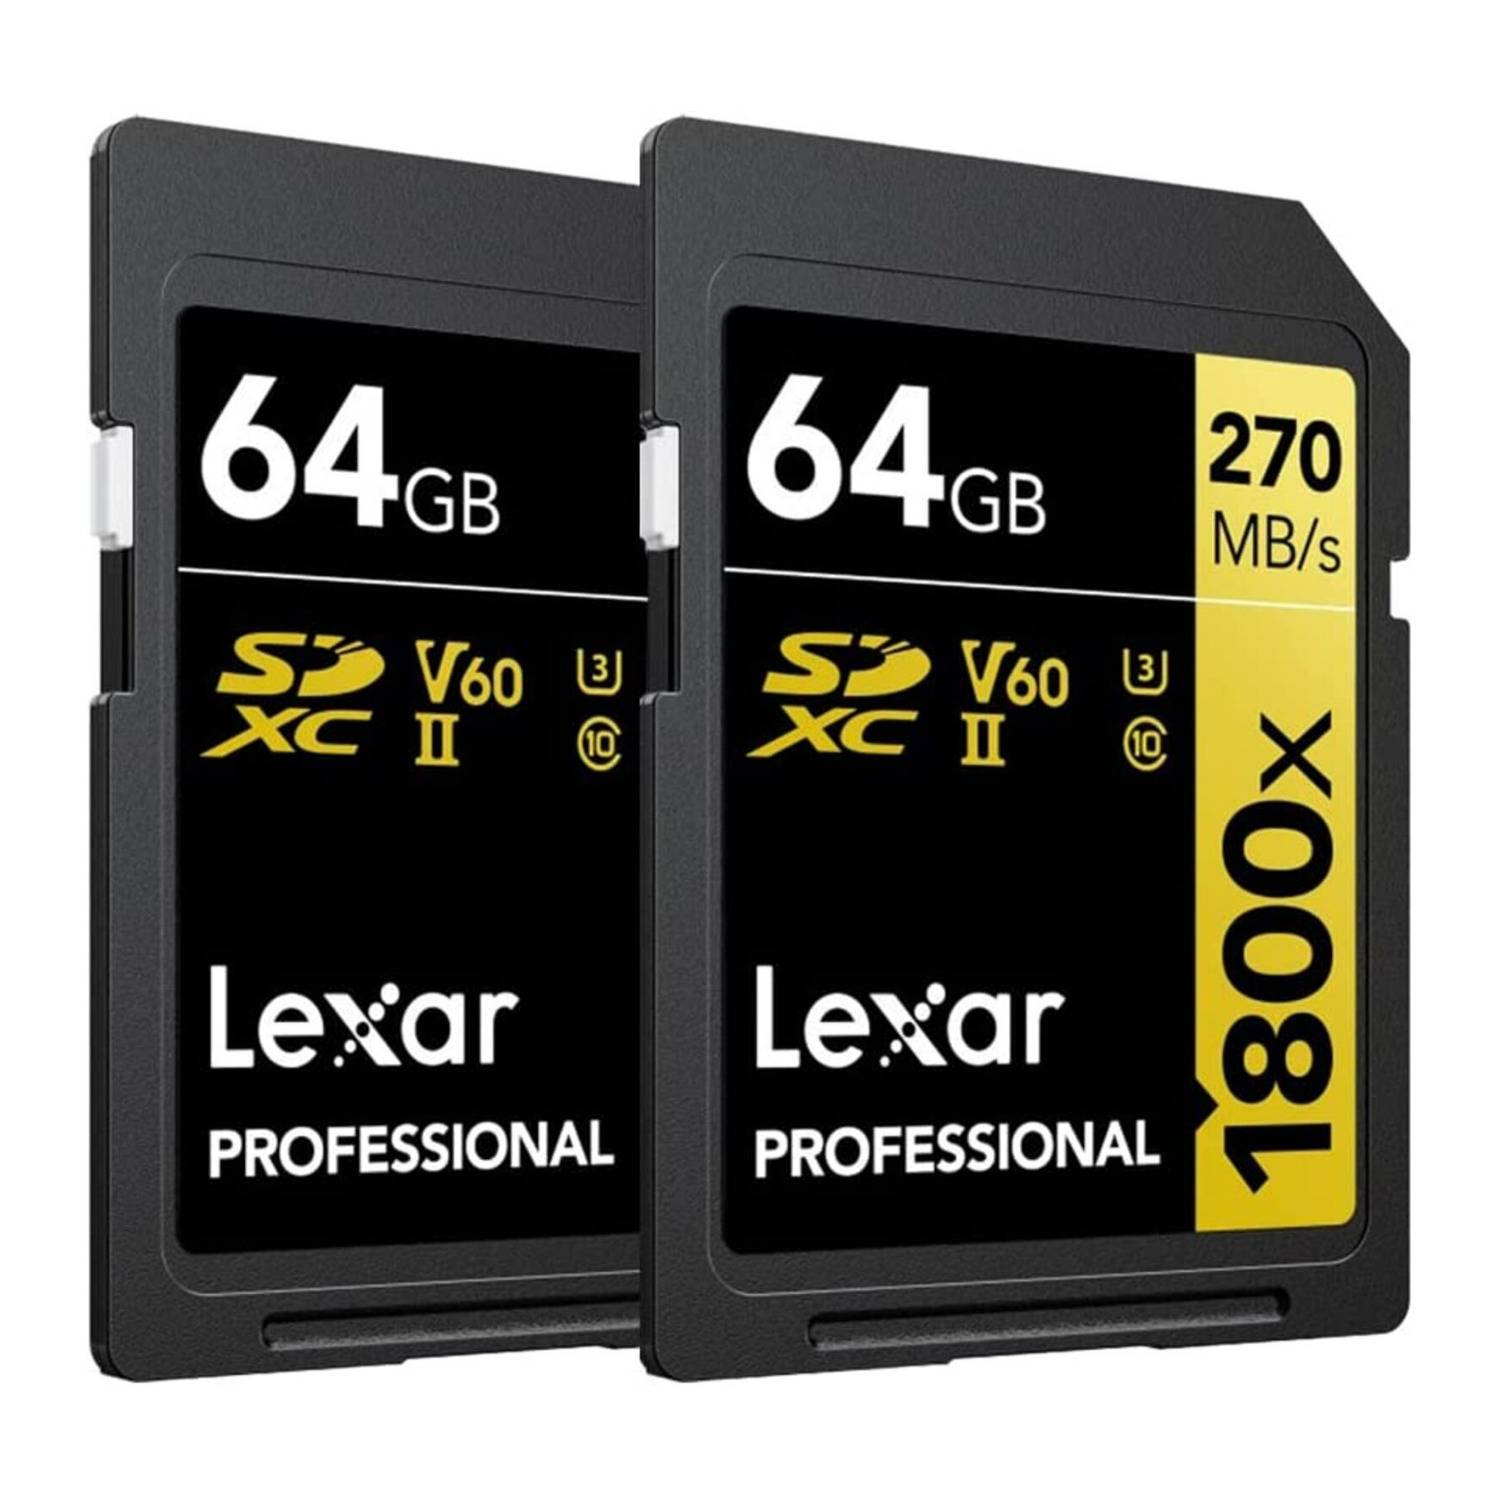 Lexar Professional 1800x SDXC UHS-II Card Gold Series, 270 MB/s Read, 180 MB/s Write (64GB, 2-Pack)